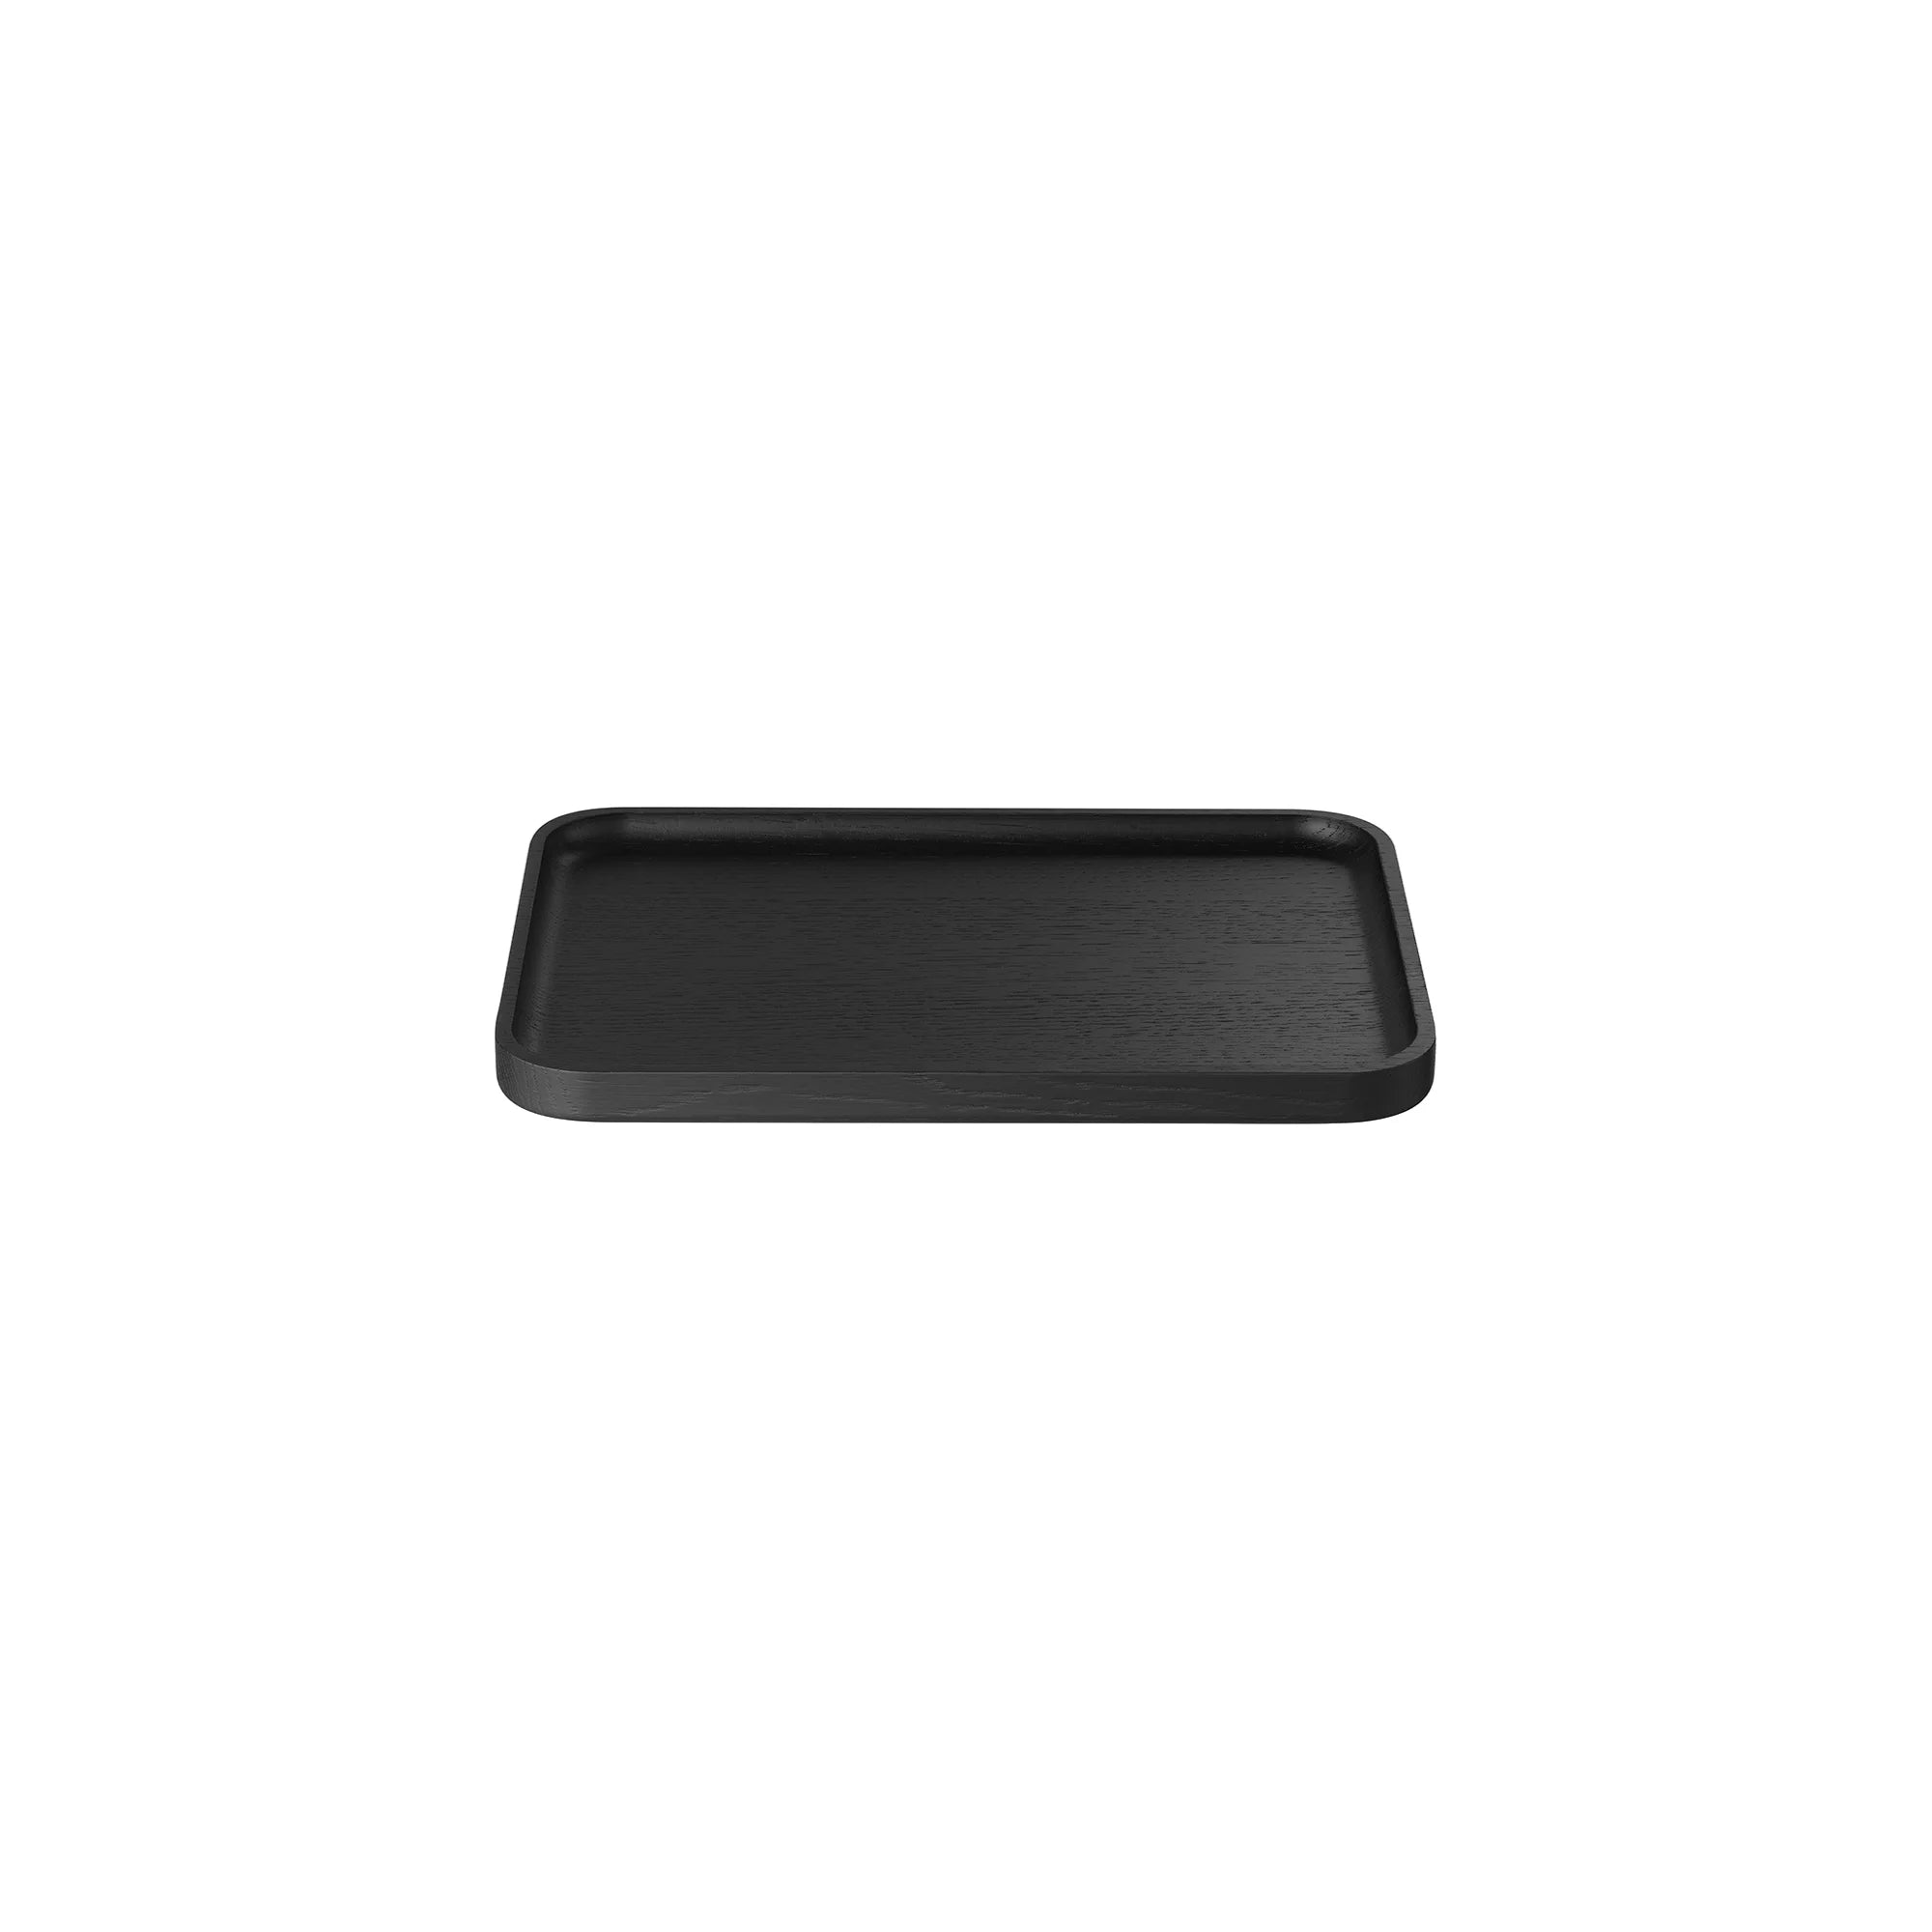 OKU Serving tray - Color Black Size Medium